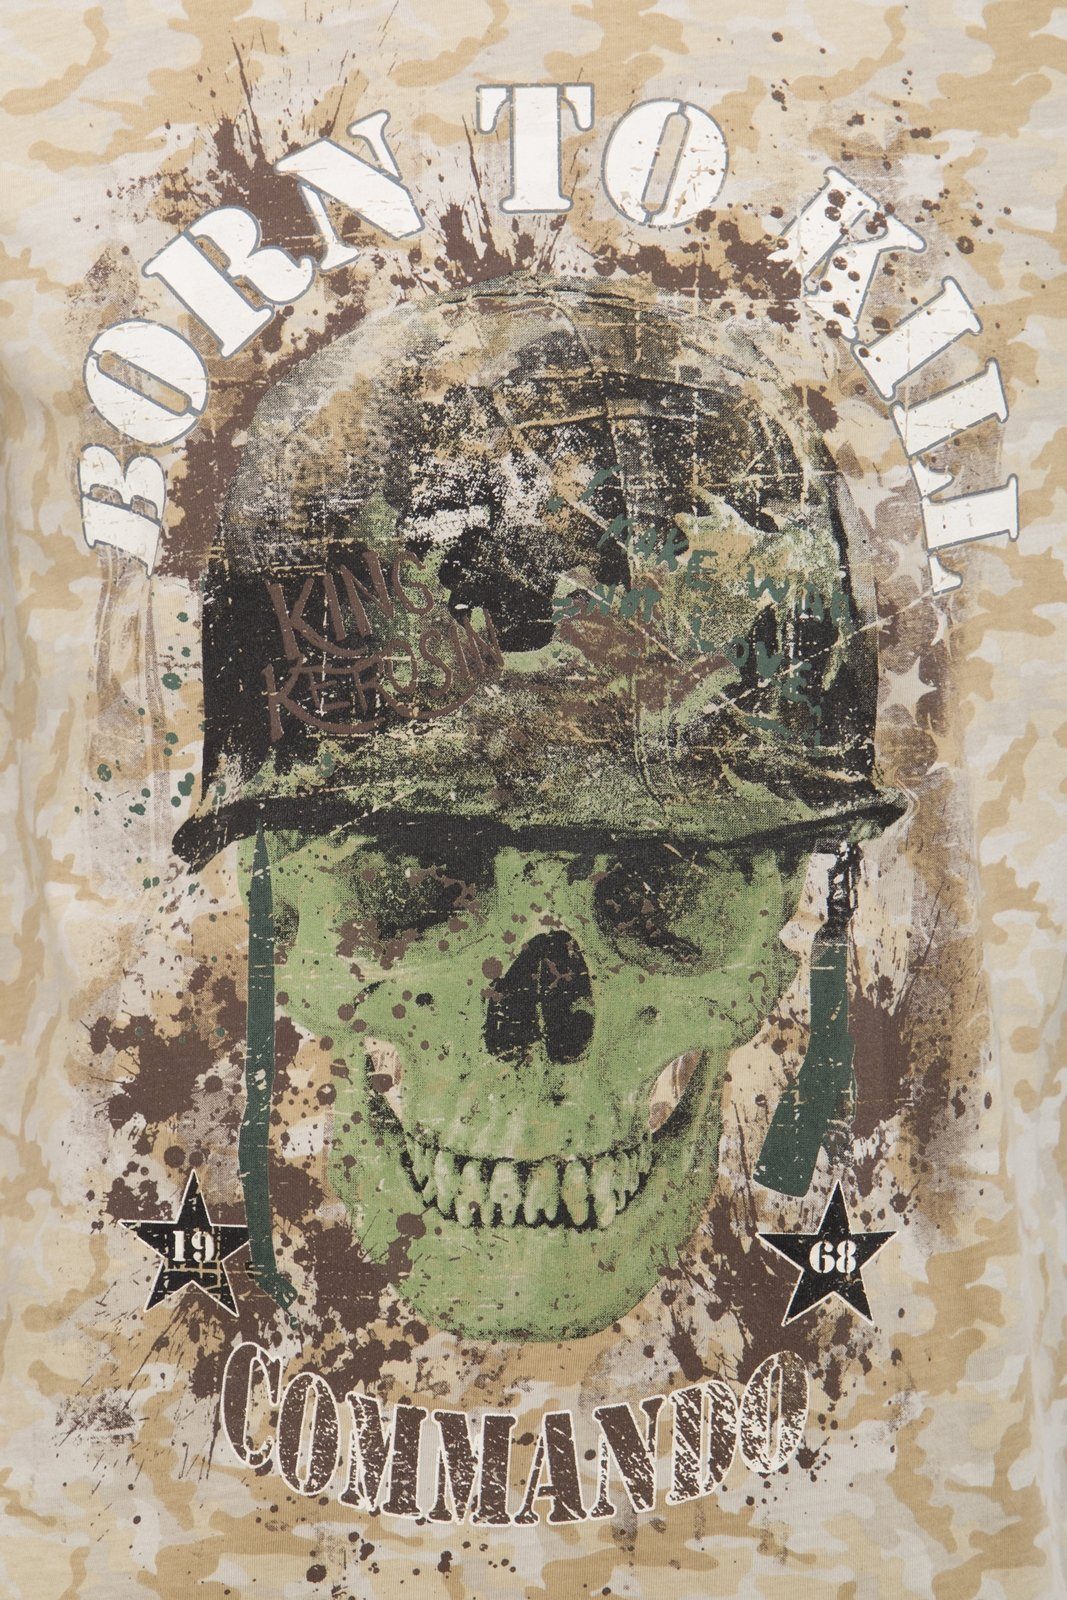 Tarn-Alloverprint mit T-Shirt core Skull-Motiv to born KingKerosin und kill